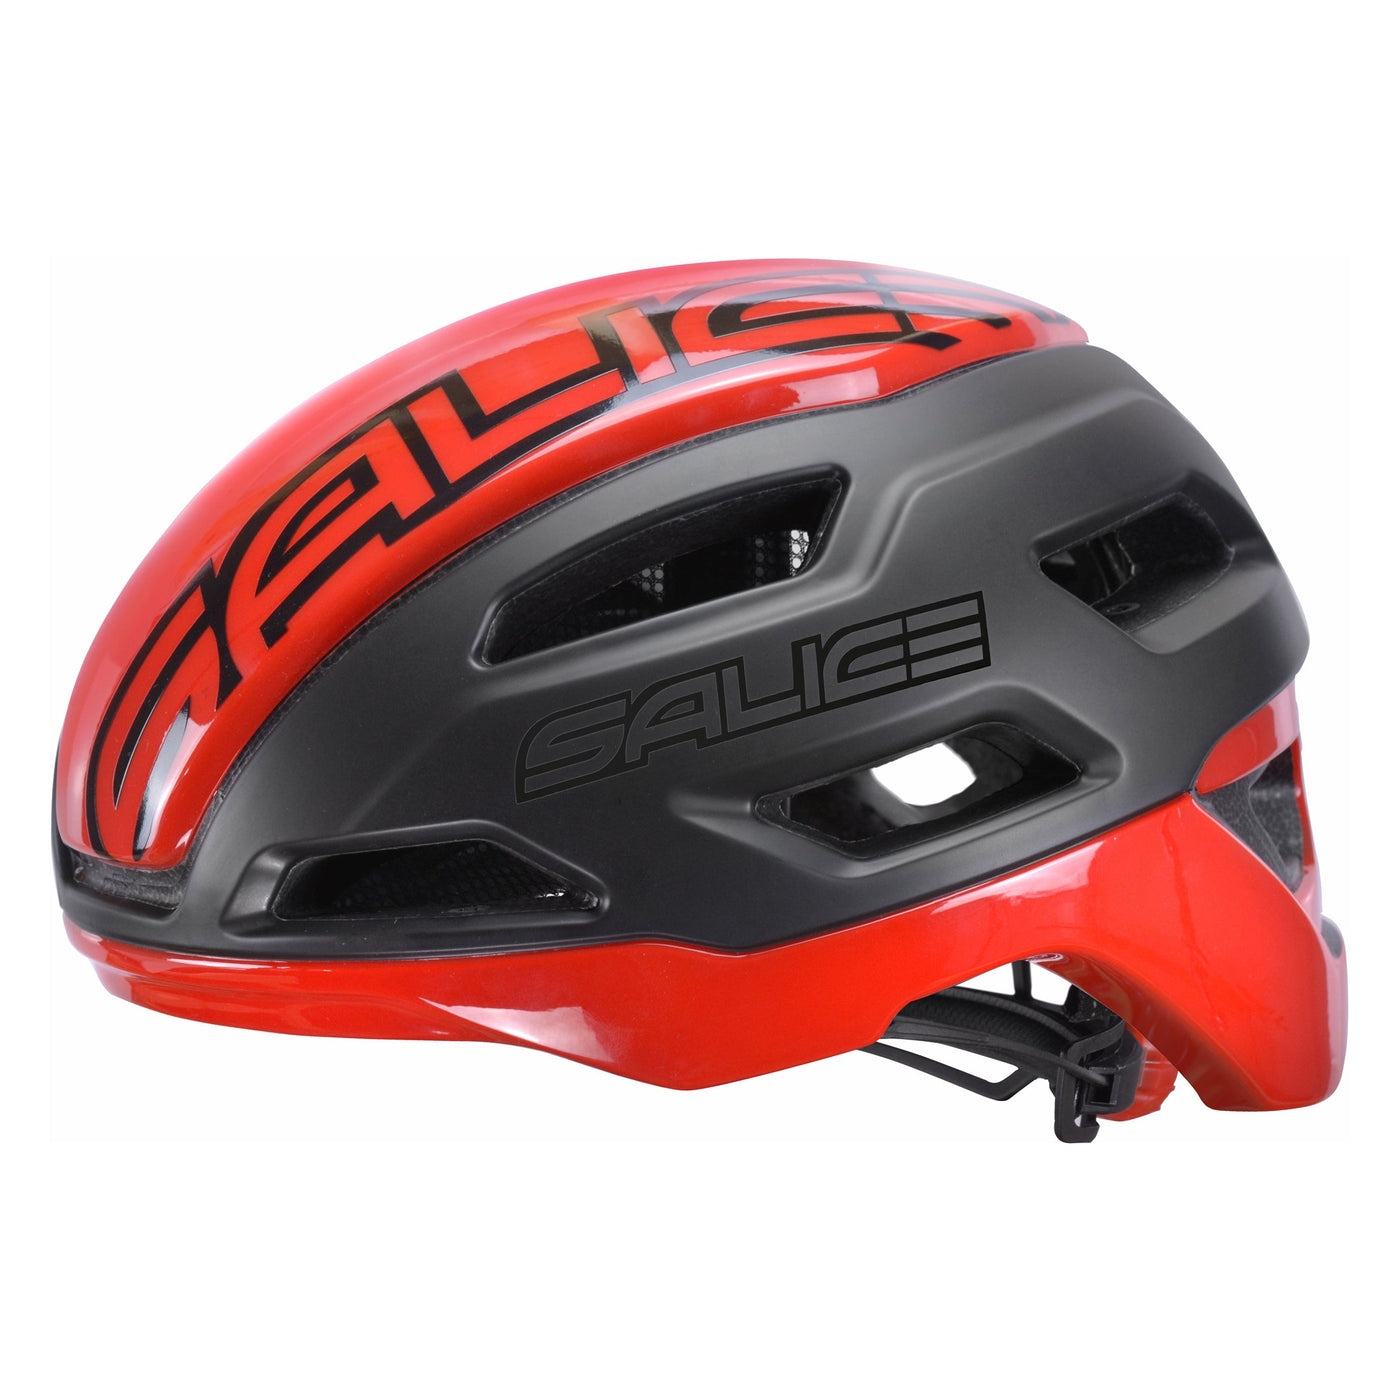 Salice Stelvio Helmet Black-Red